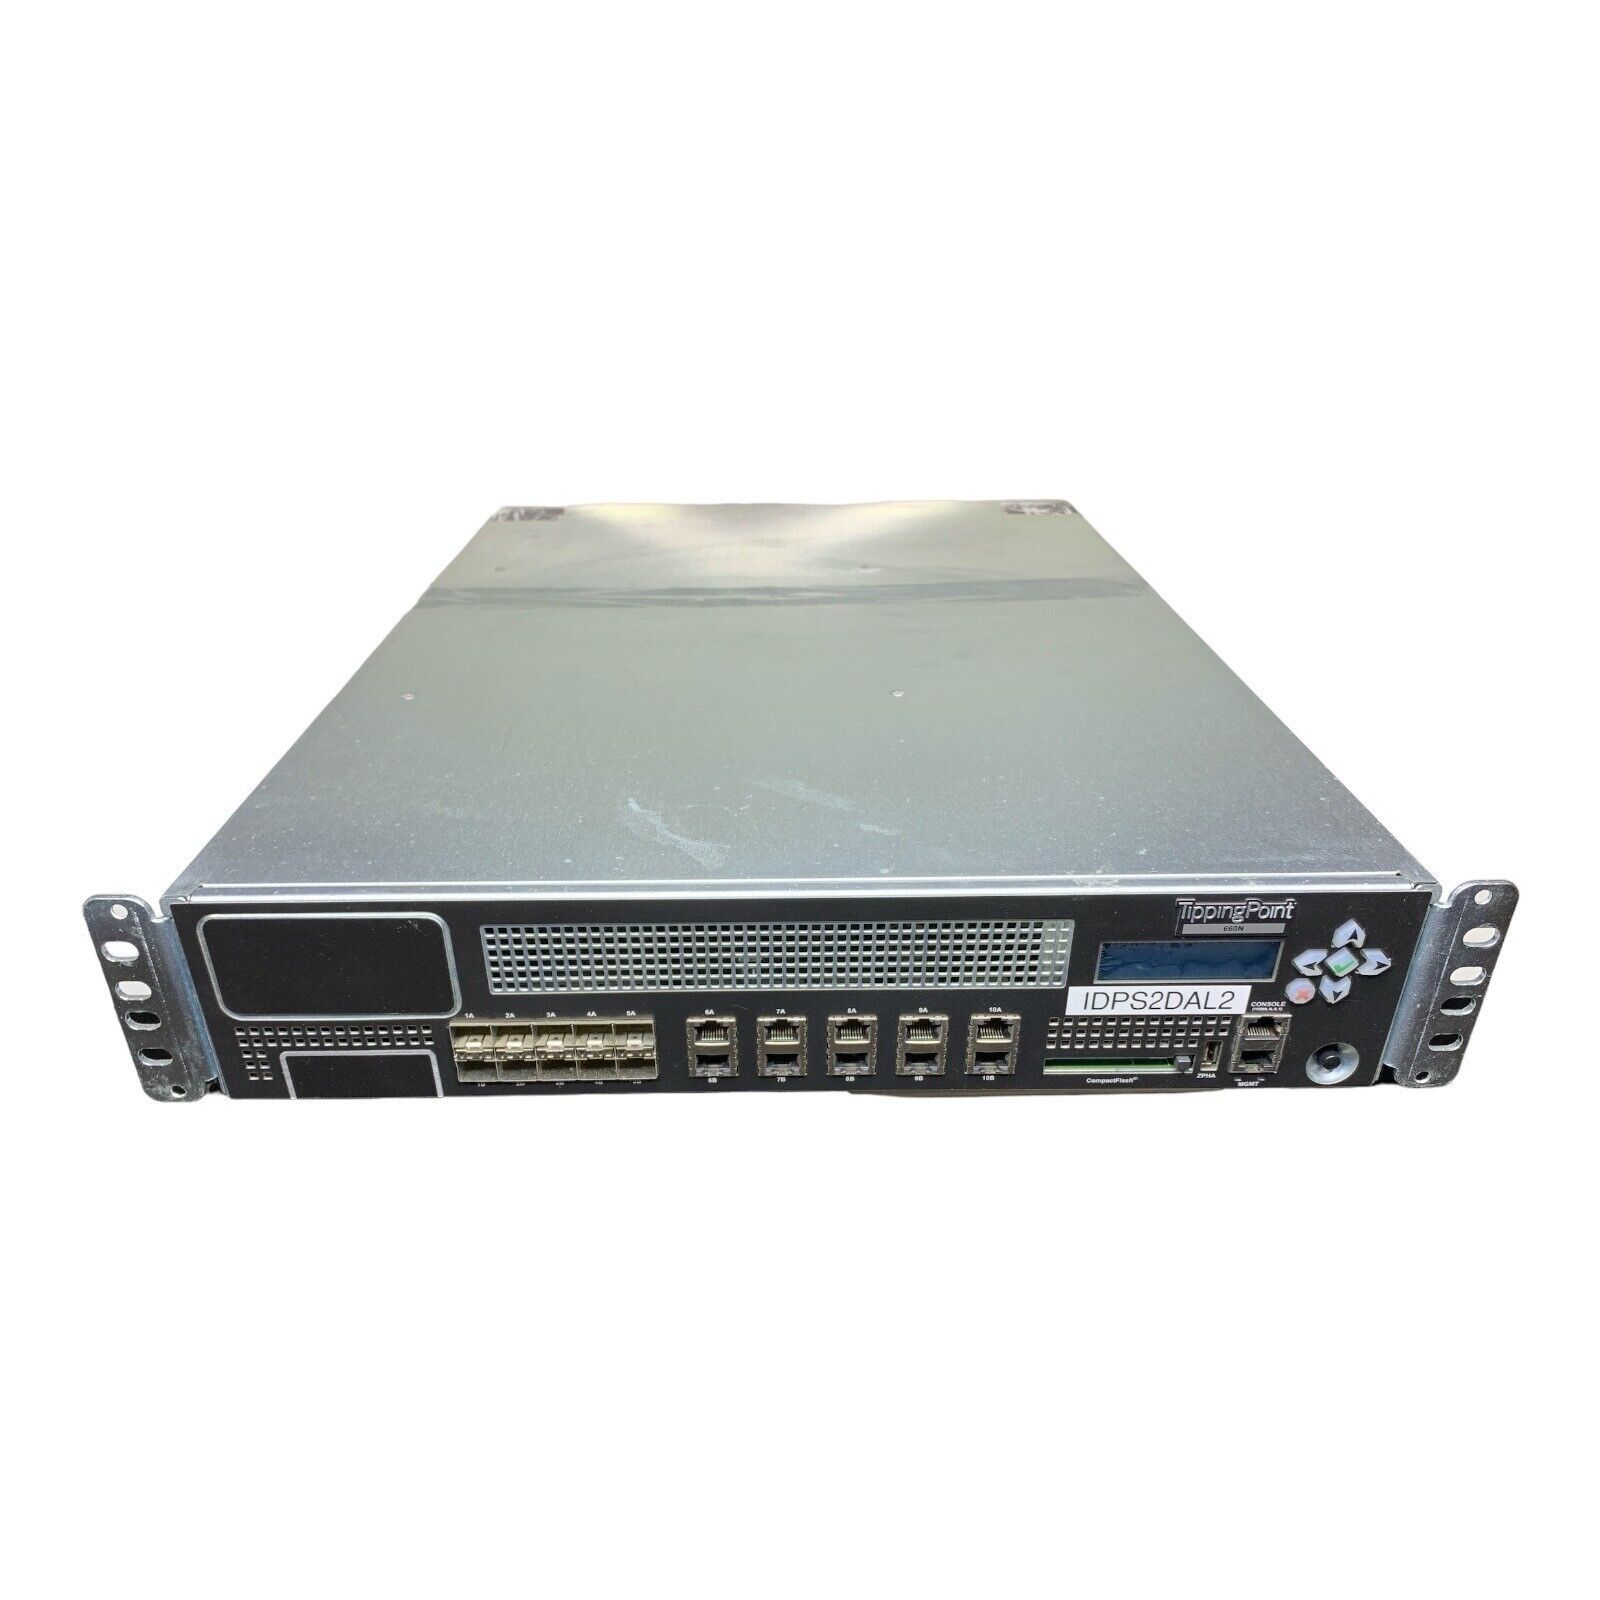 HP Tipping Point 660n Intrusion Prevention System Platform TPRN0660BAS96